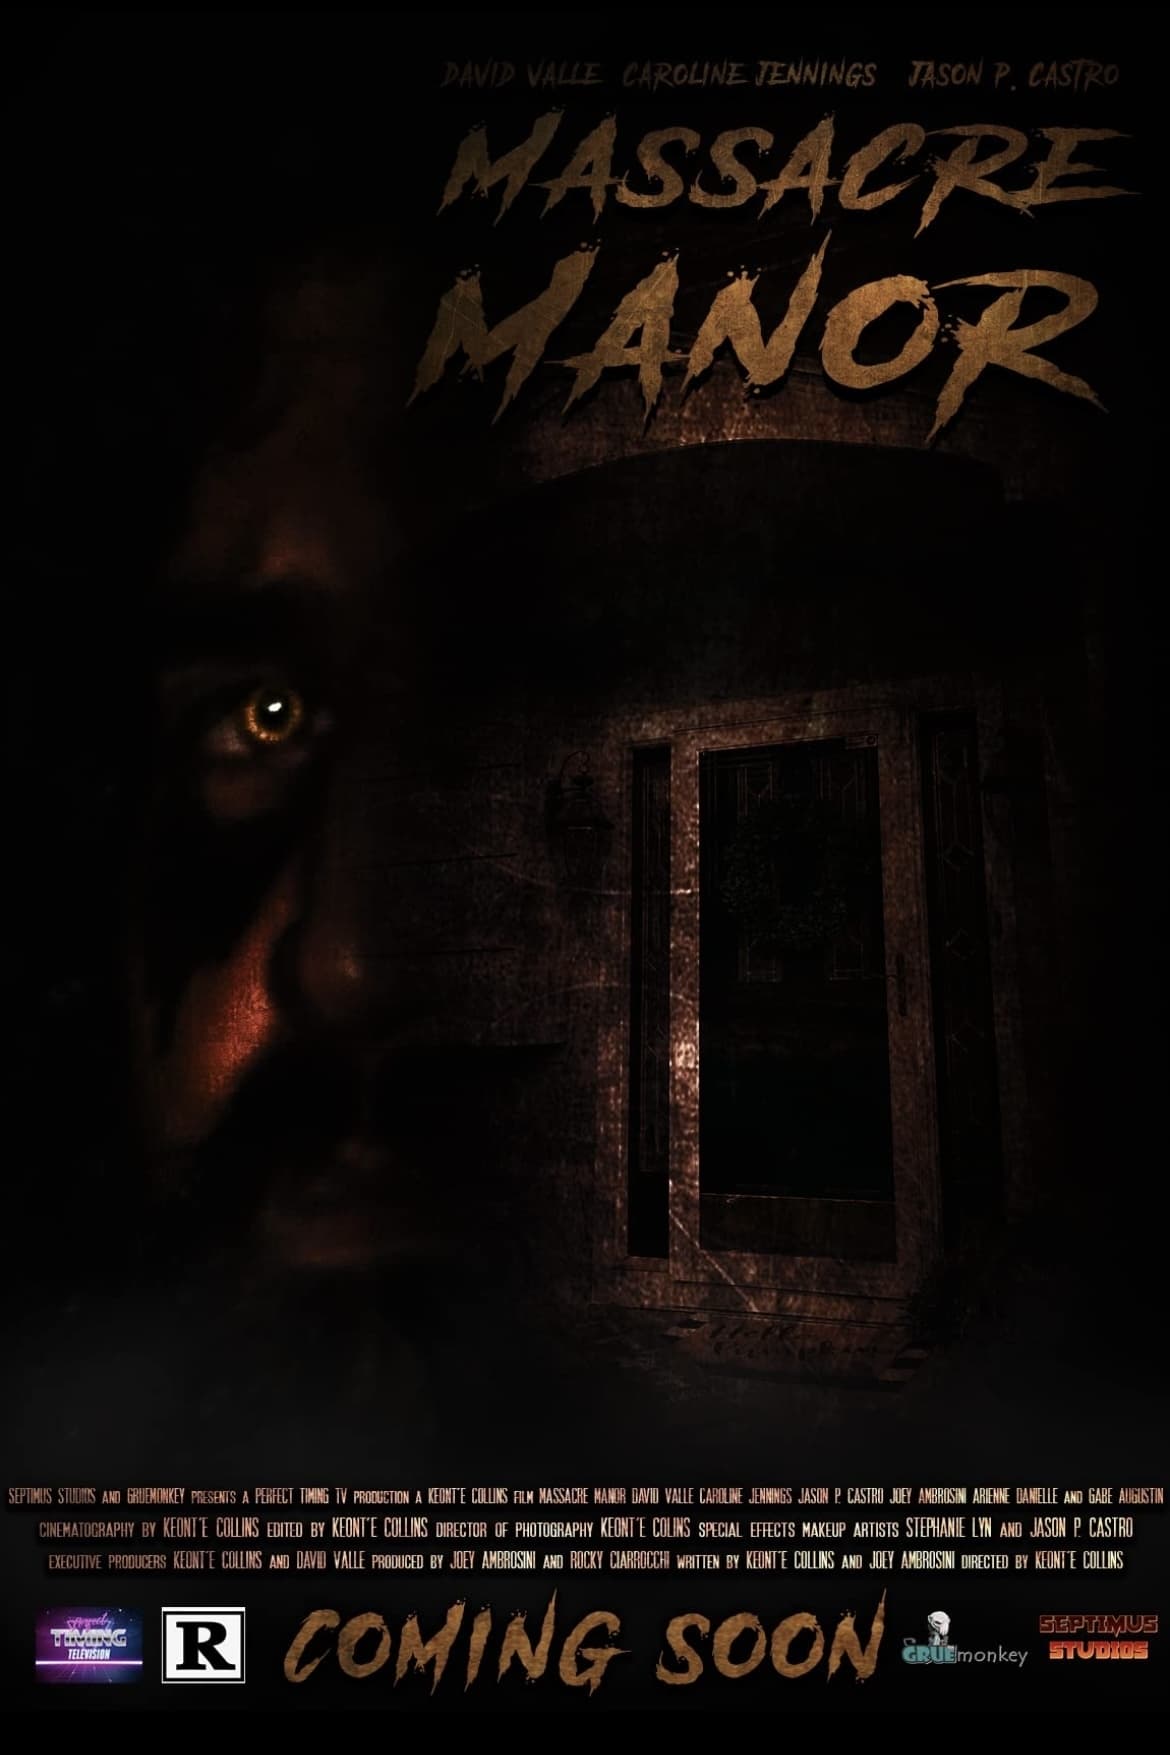 Massacre Manor